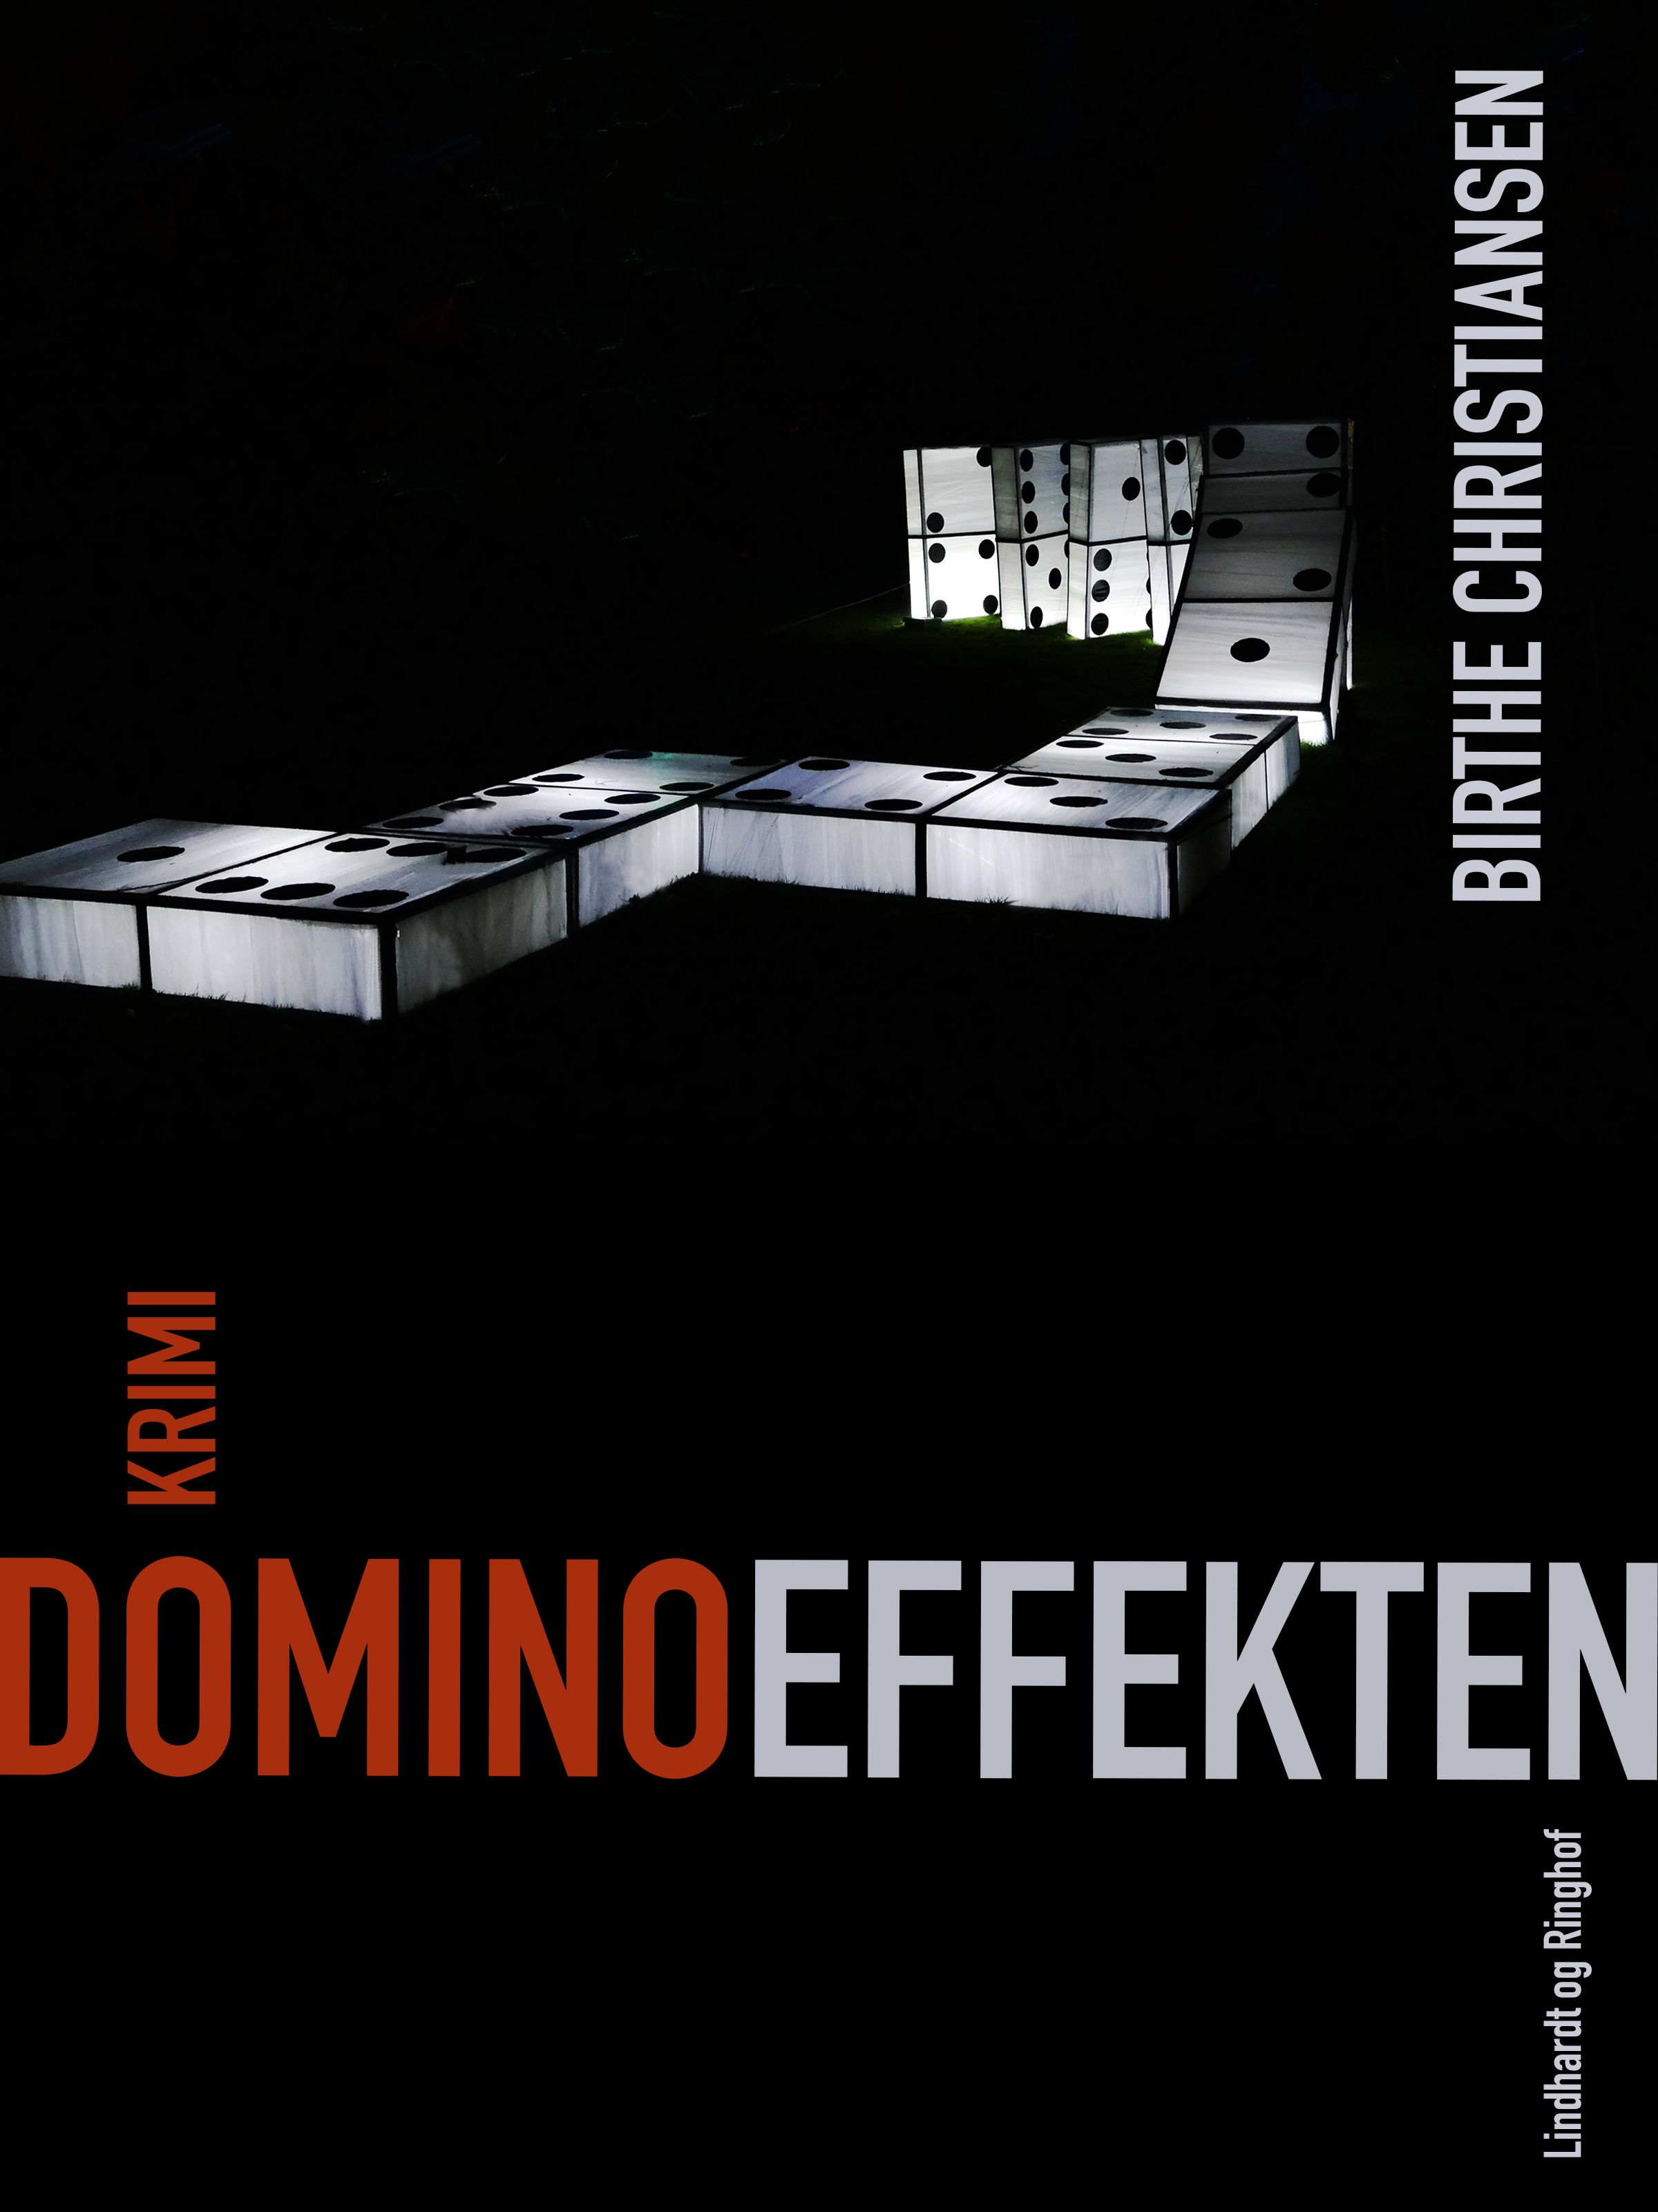 Dominoeffekten, audiobook by Birthe Christiansen